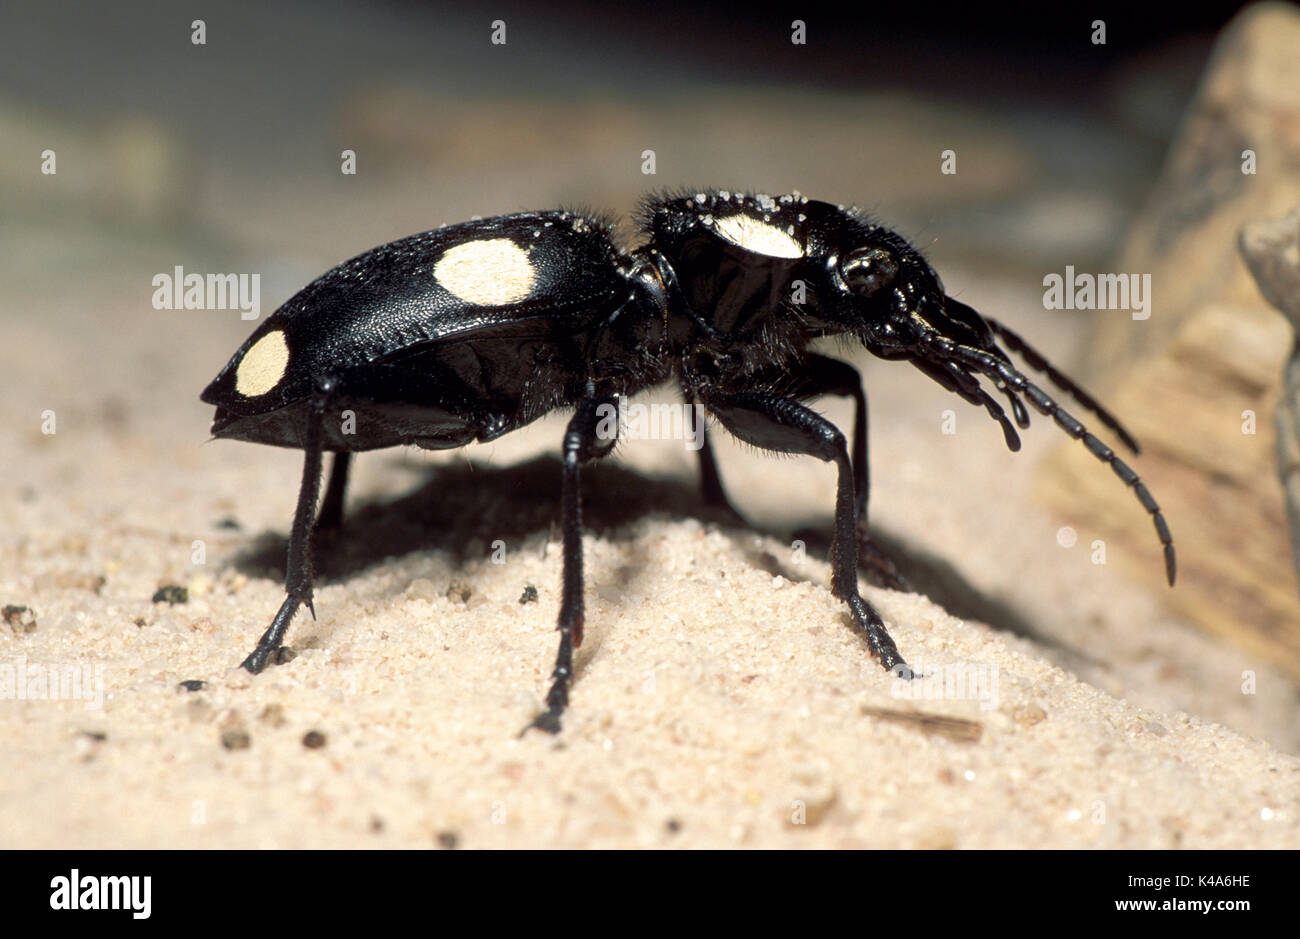 Domino Beetle, Anthia sexguttata, black with white spots, desert and scrub habitats, long stilt like legs to raise their bodies off the hot sand, Stock Photo